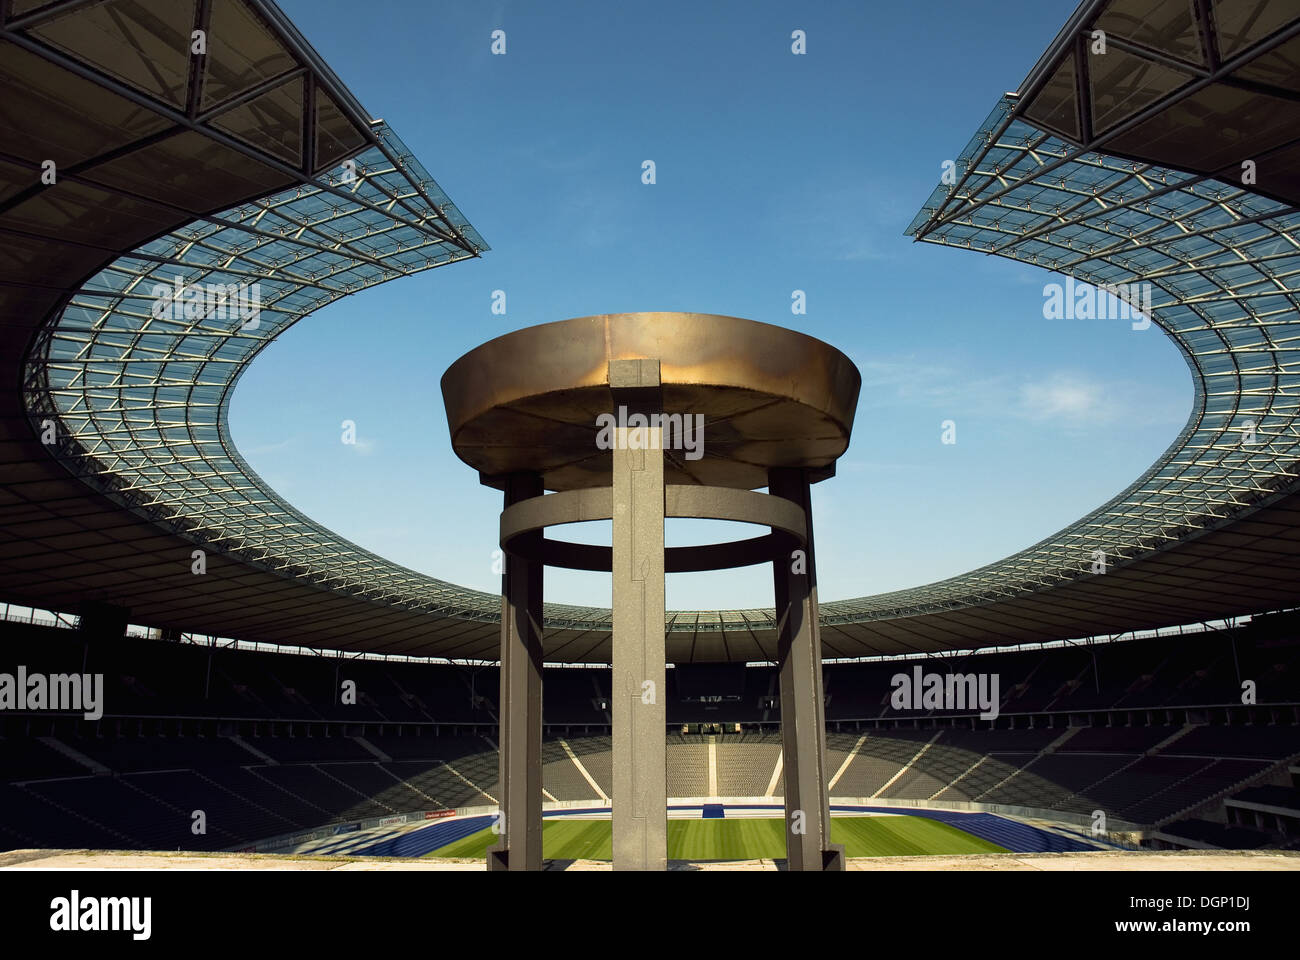 Berlin, Allemagne, le brasero dans le Stade Olympique de Berlin Photo Stock  - Alamy